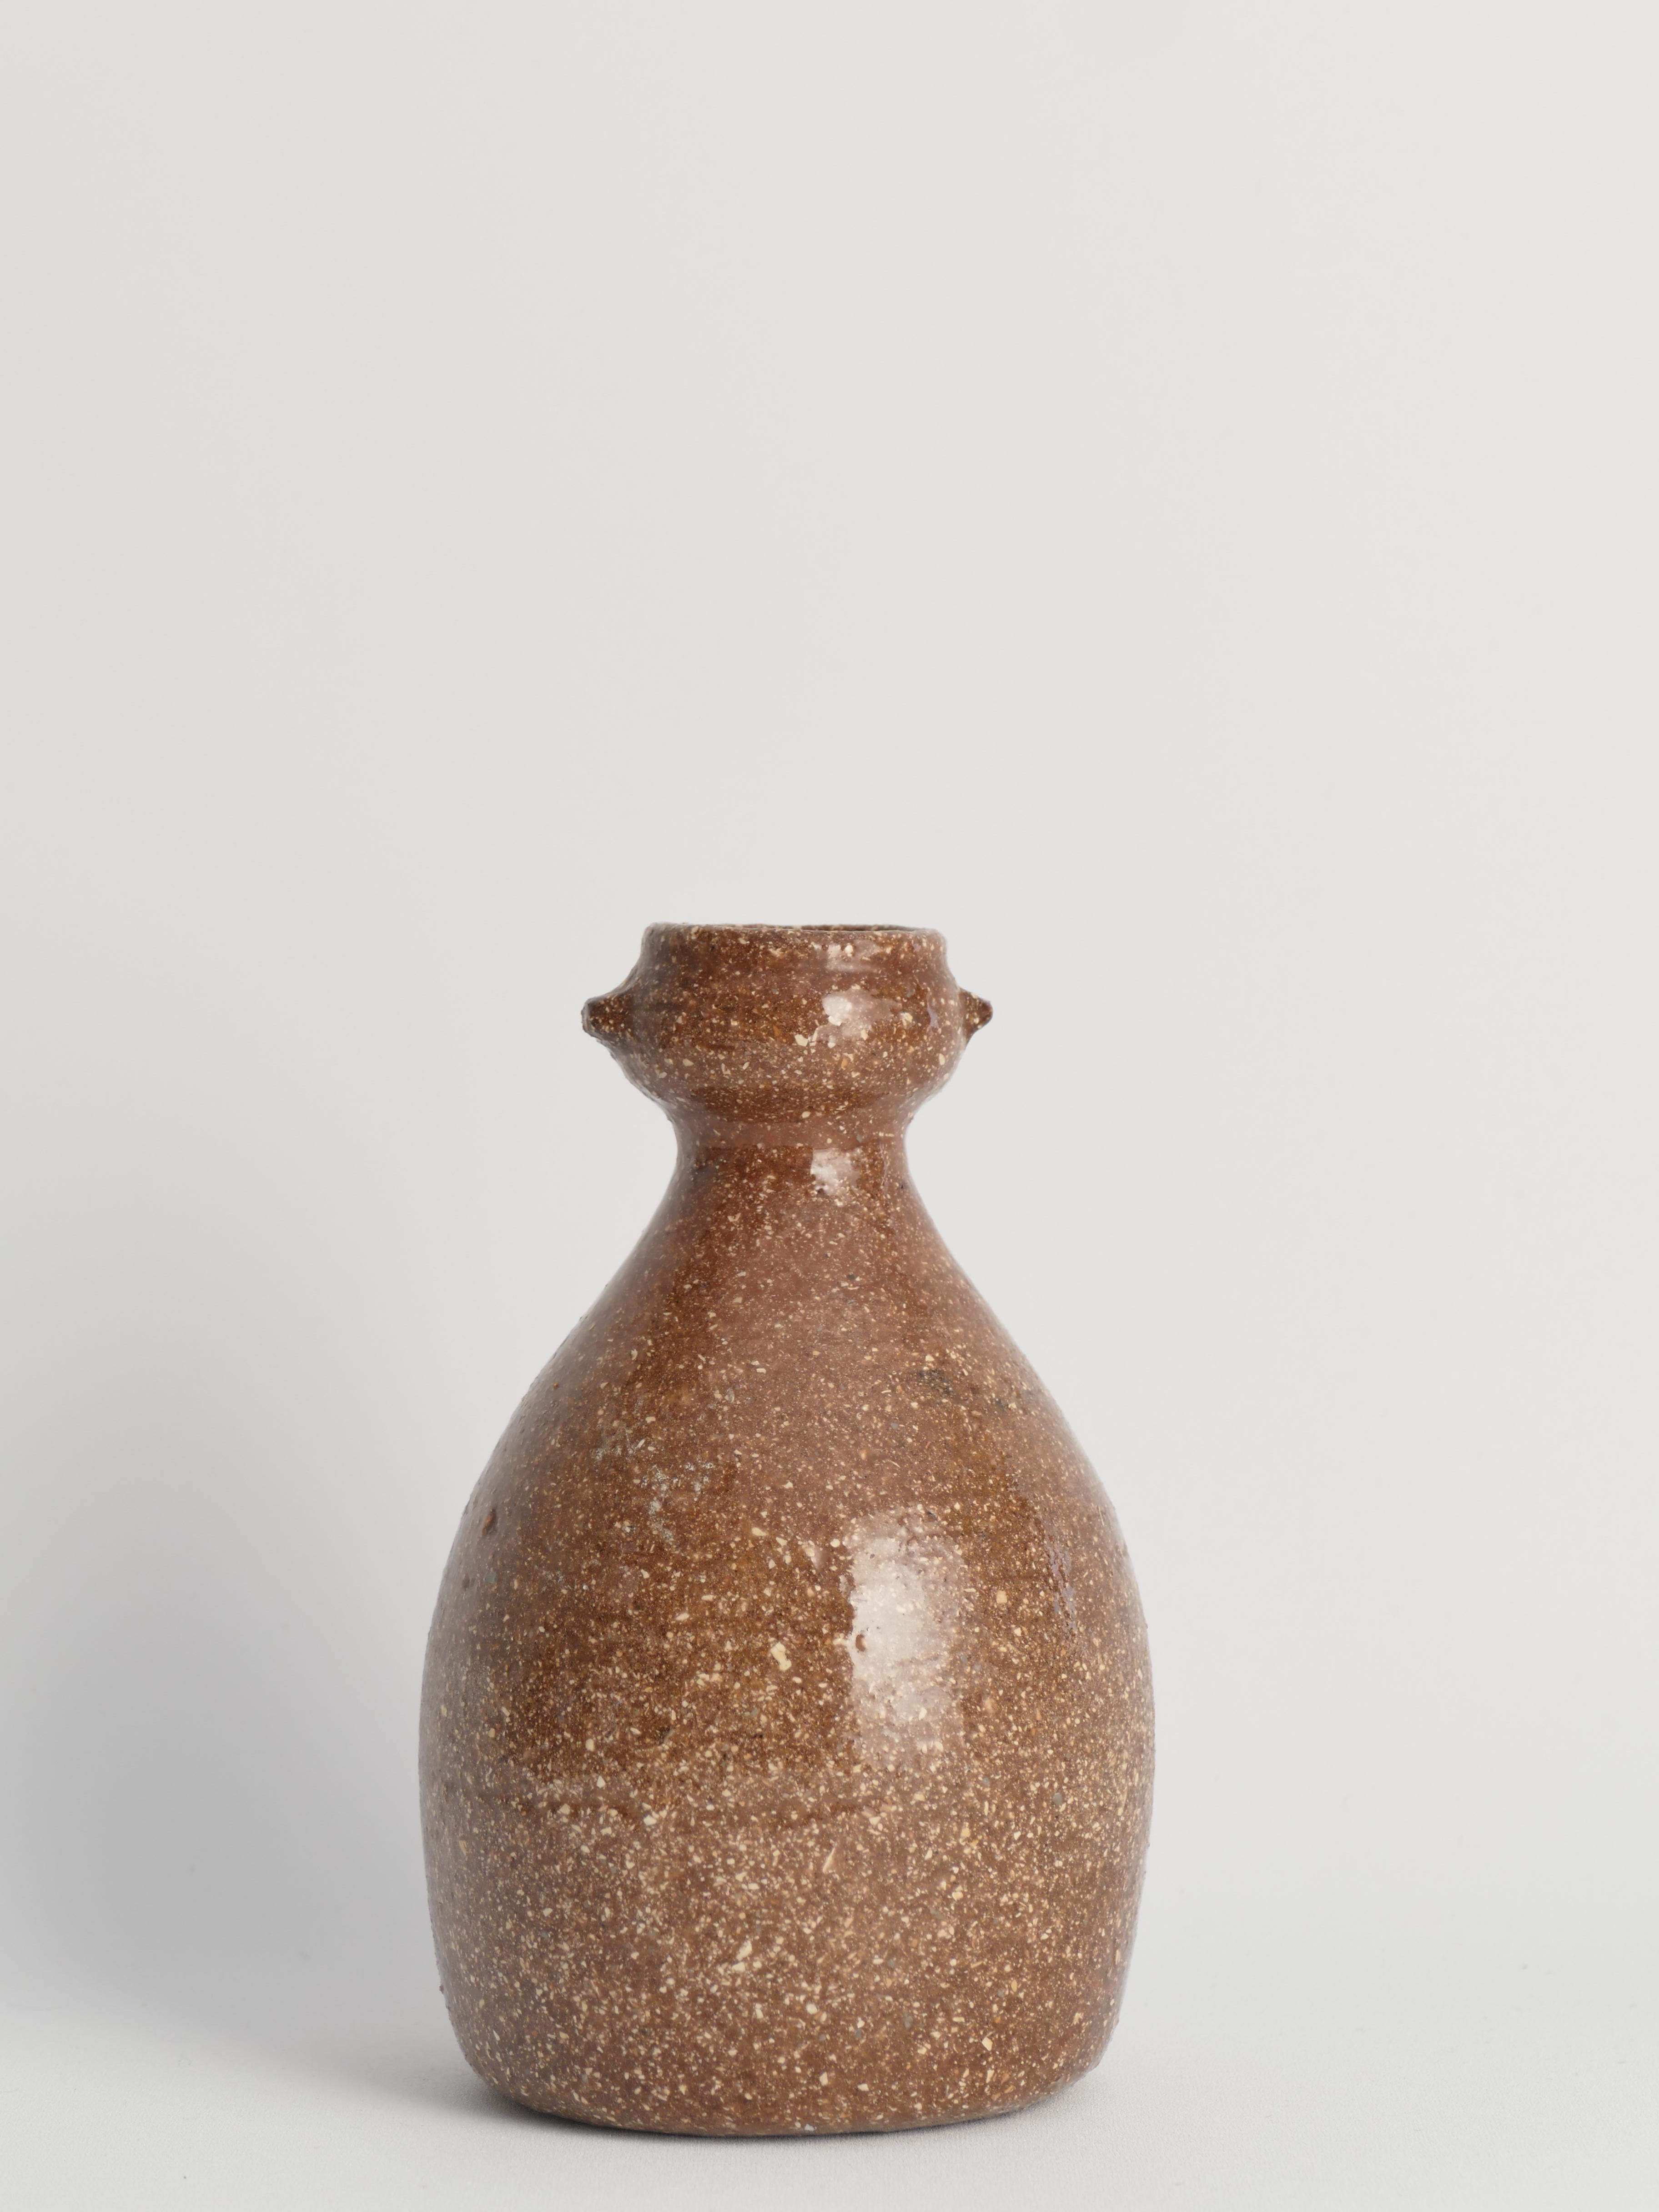 Glazed Japanese Shigaraki Inspired Handmade Stoneware Vase with Barnacle-Like Texture For Sale